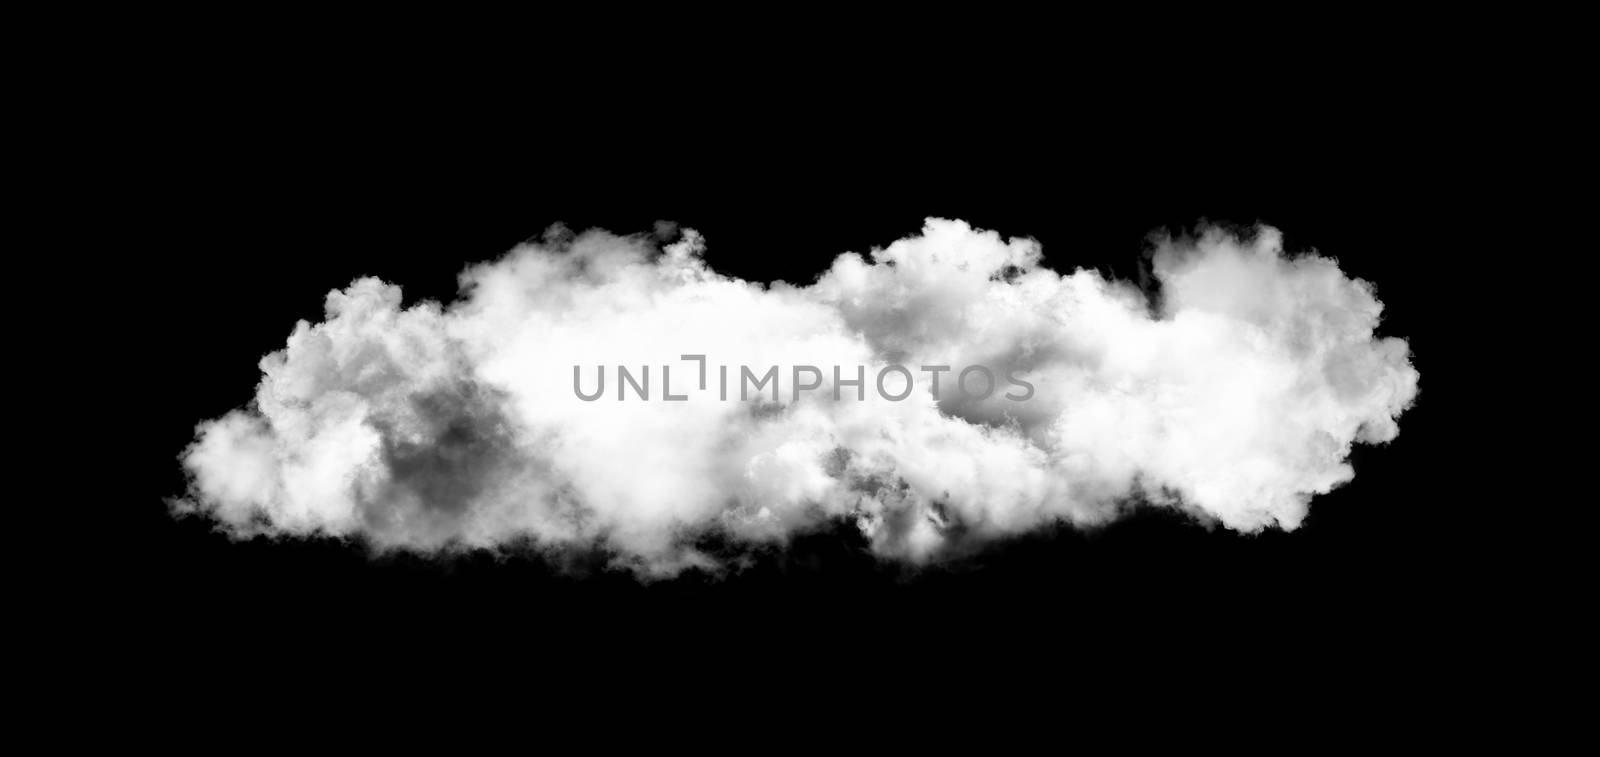 strange cloud on black background by sommai